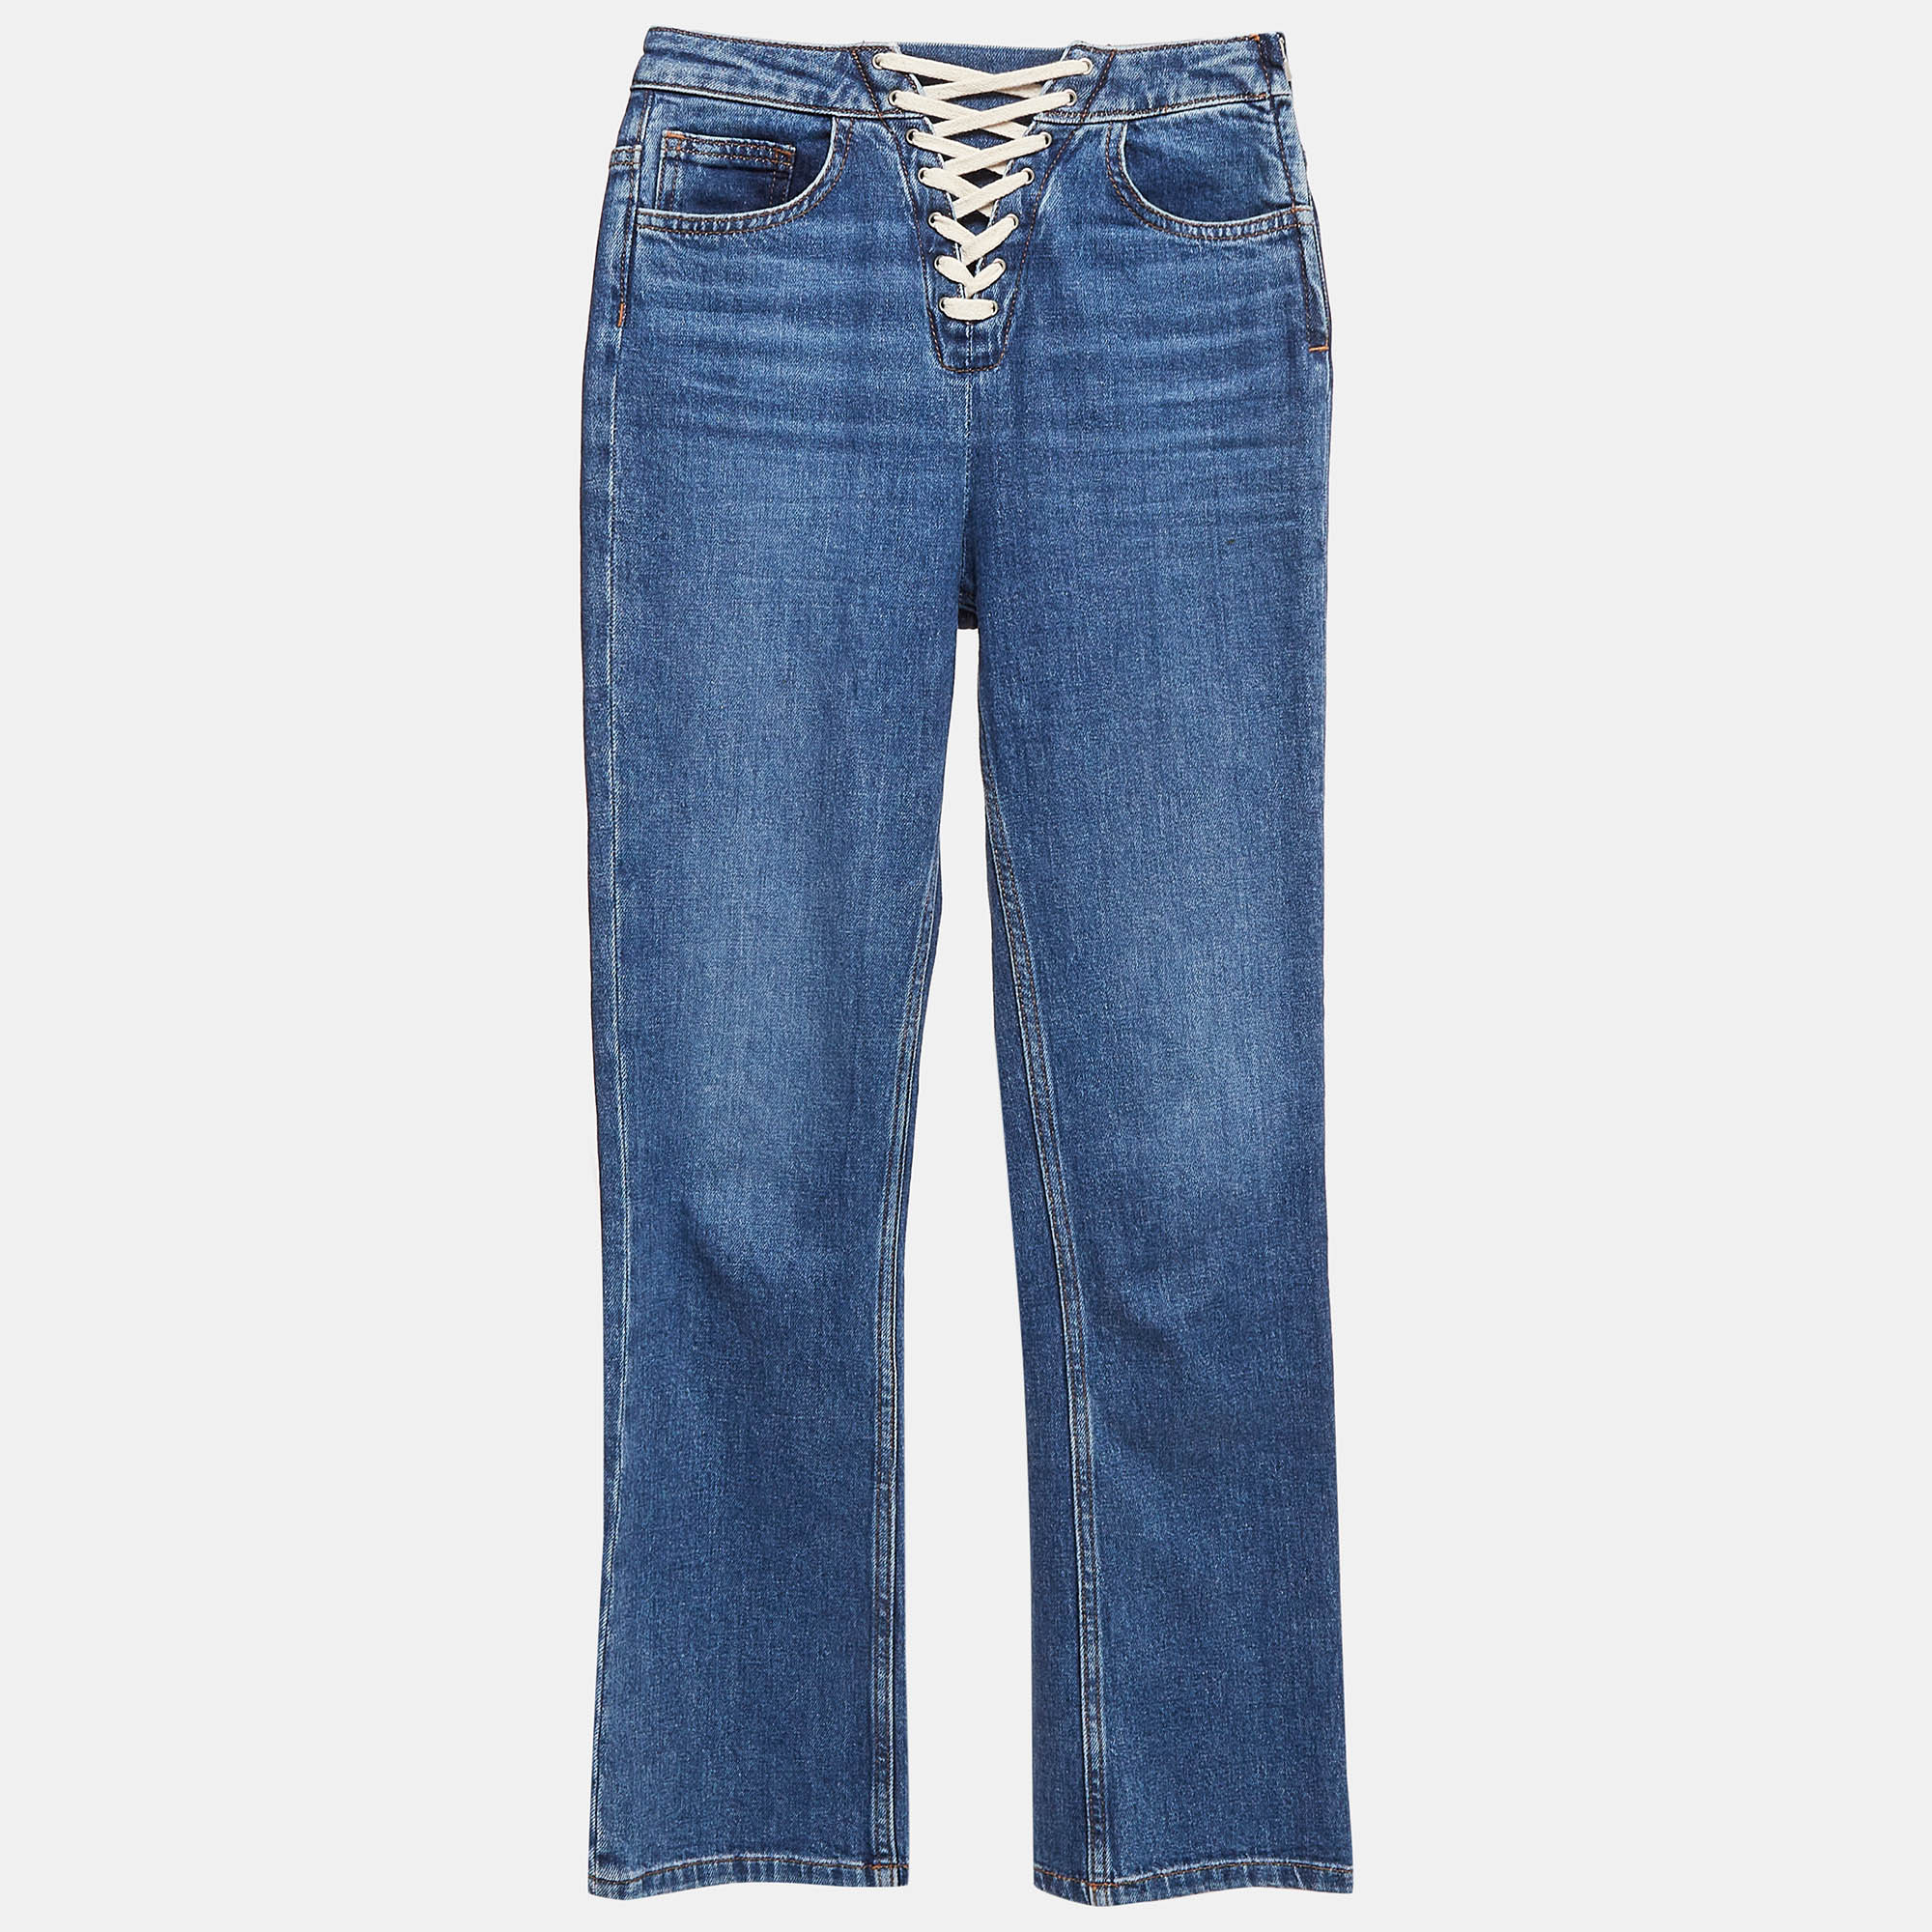 

Maje Blue Lace-Up Denim High Rise Jeans XS Waist 26"